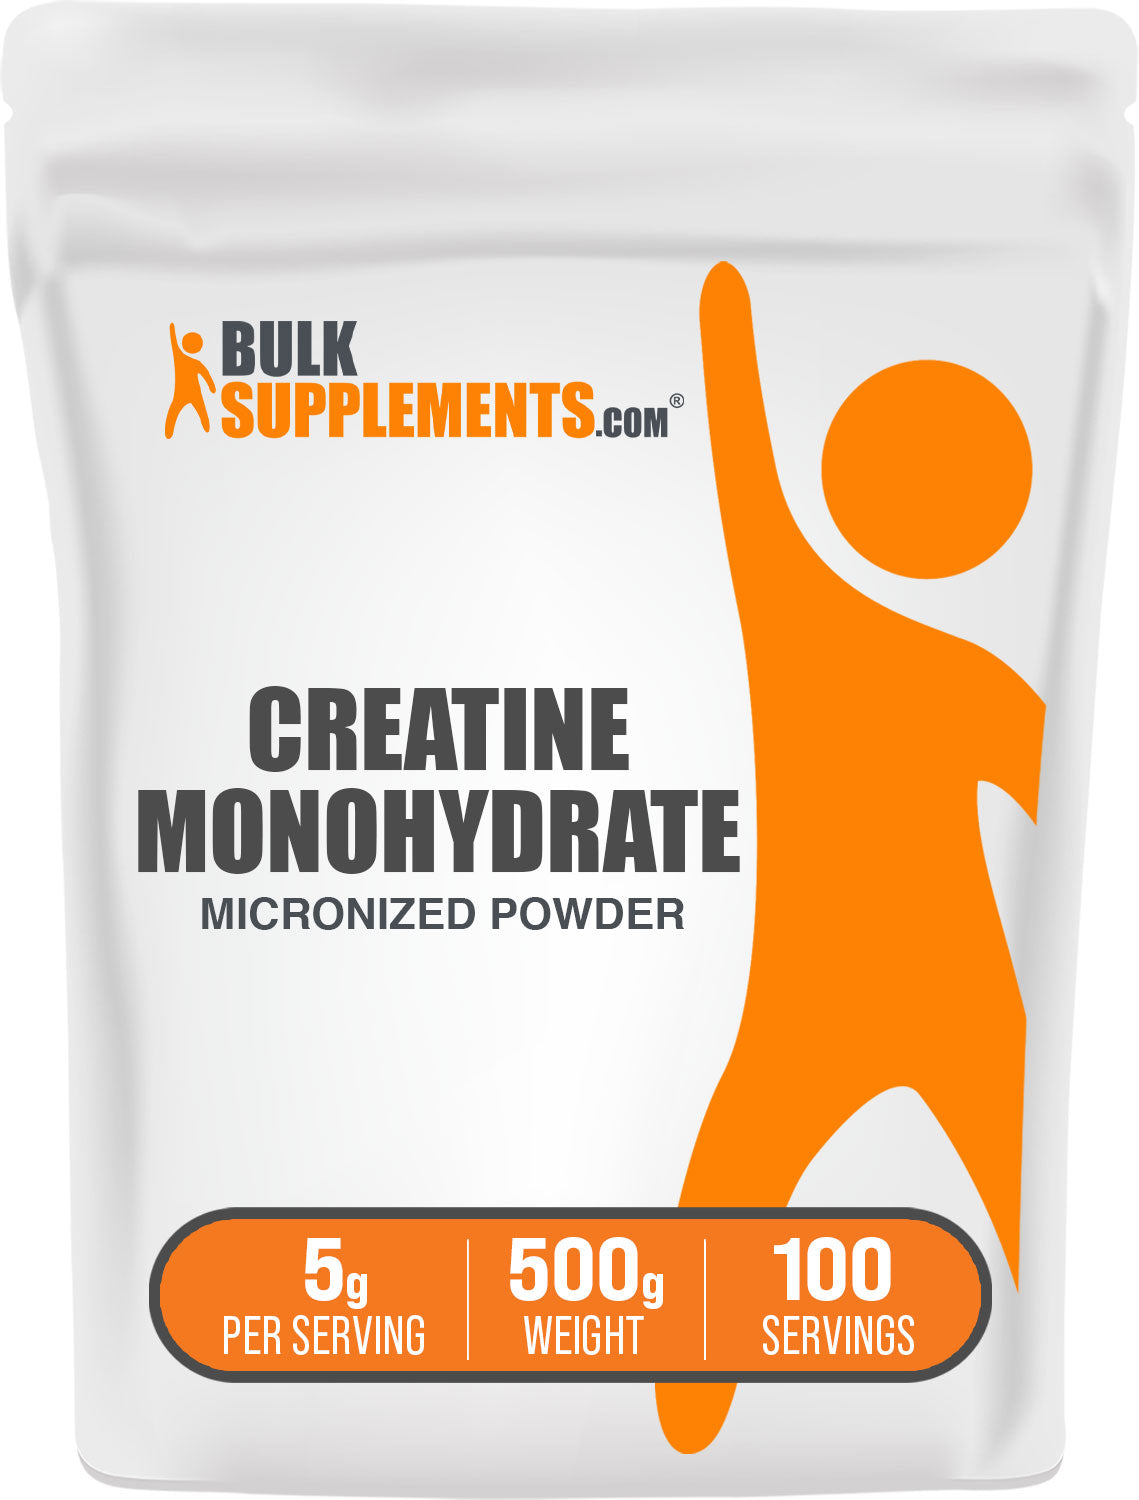 Bulk Supplements (@bulksupplements) • Instagram photos and videos